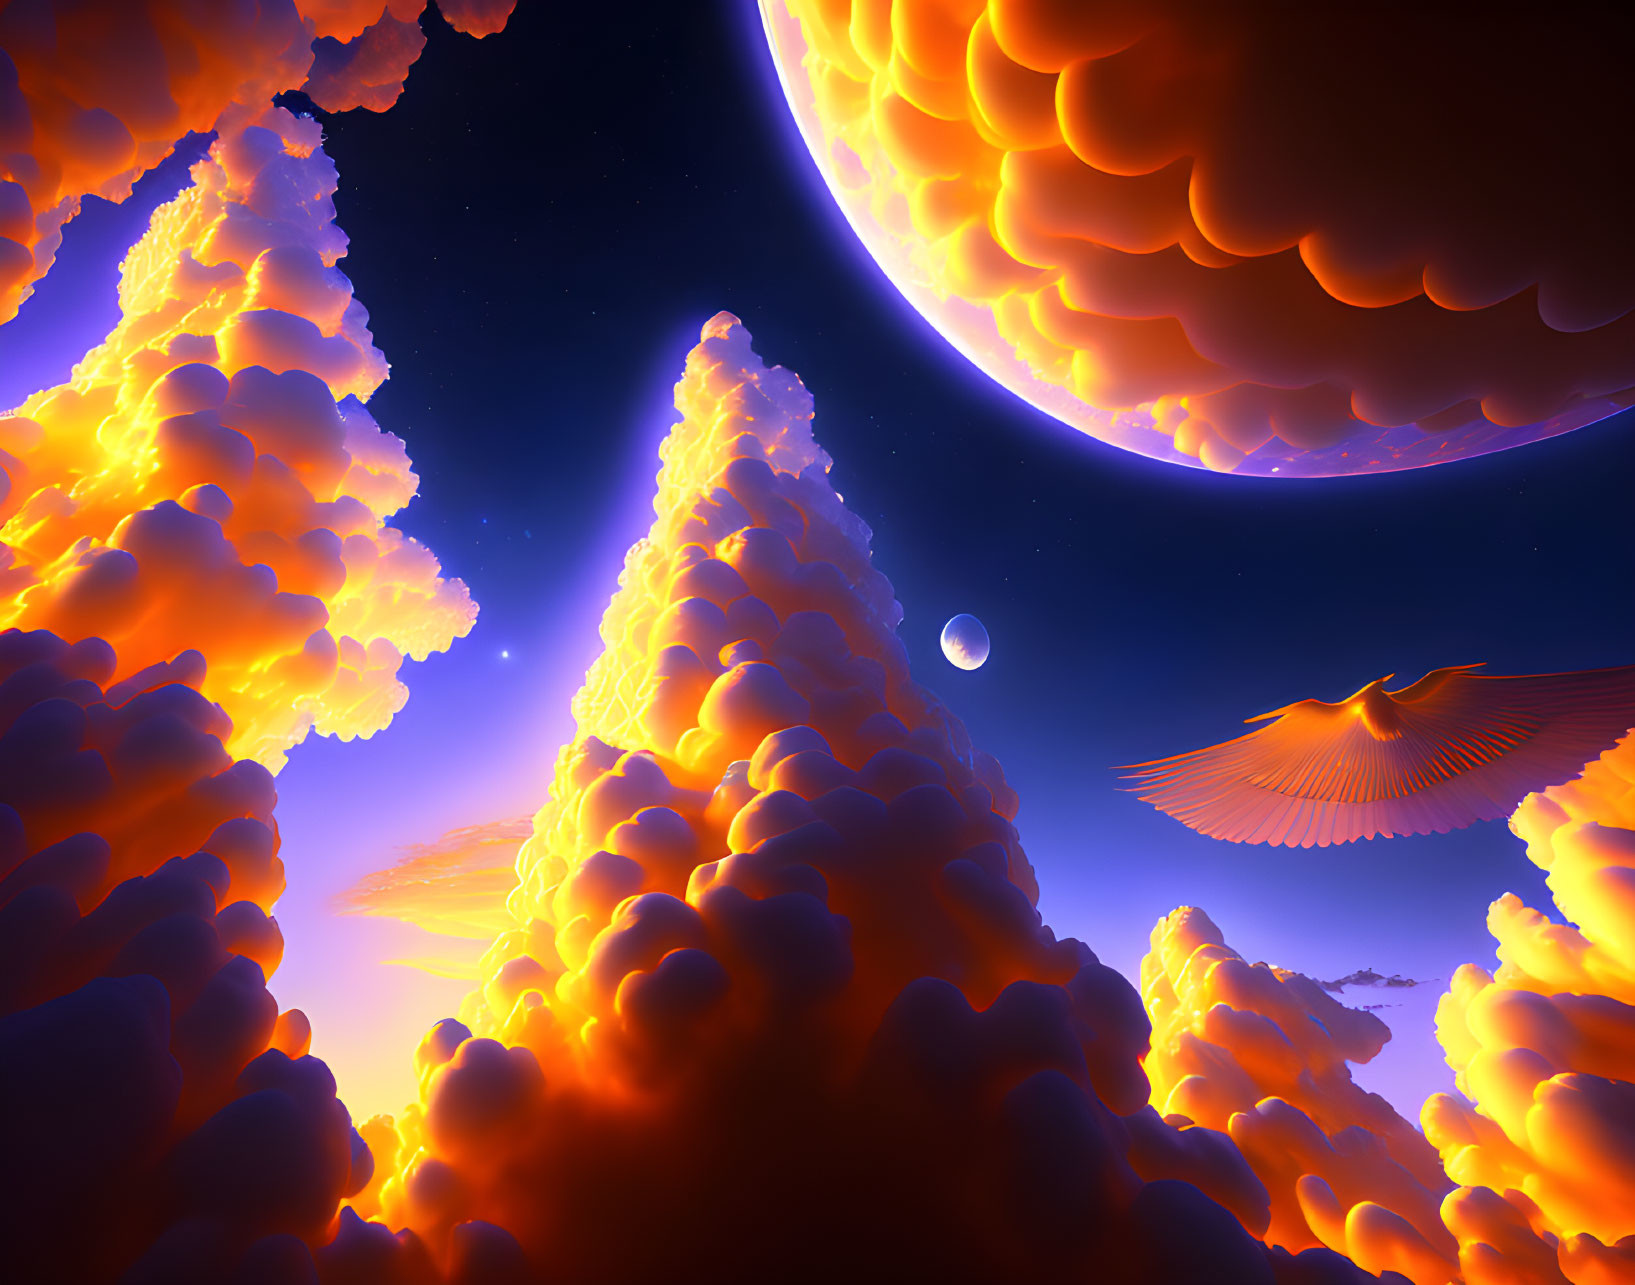 Surreal sci-fi scene: orange clouds, giant planet, moon, bird-like creature